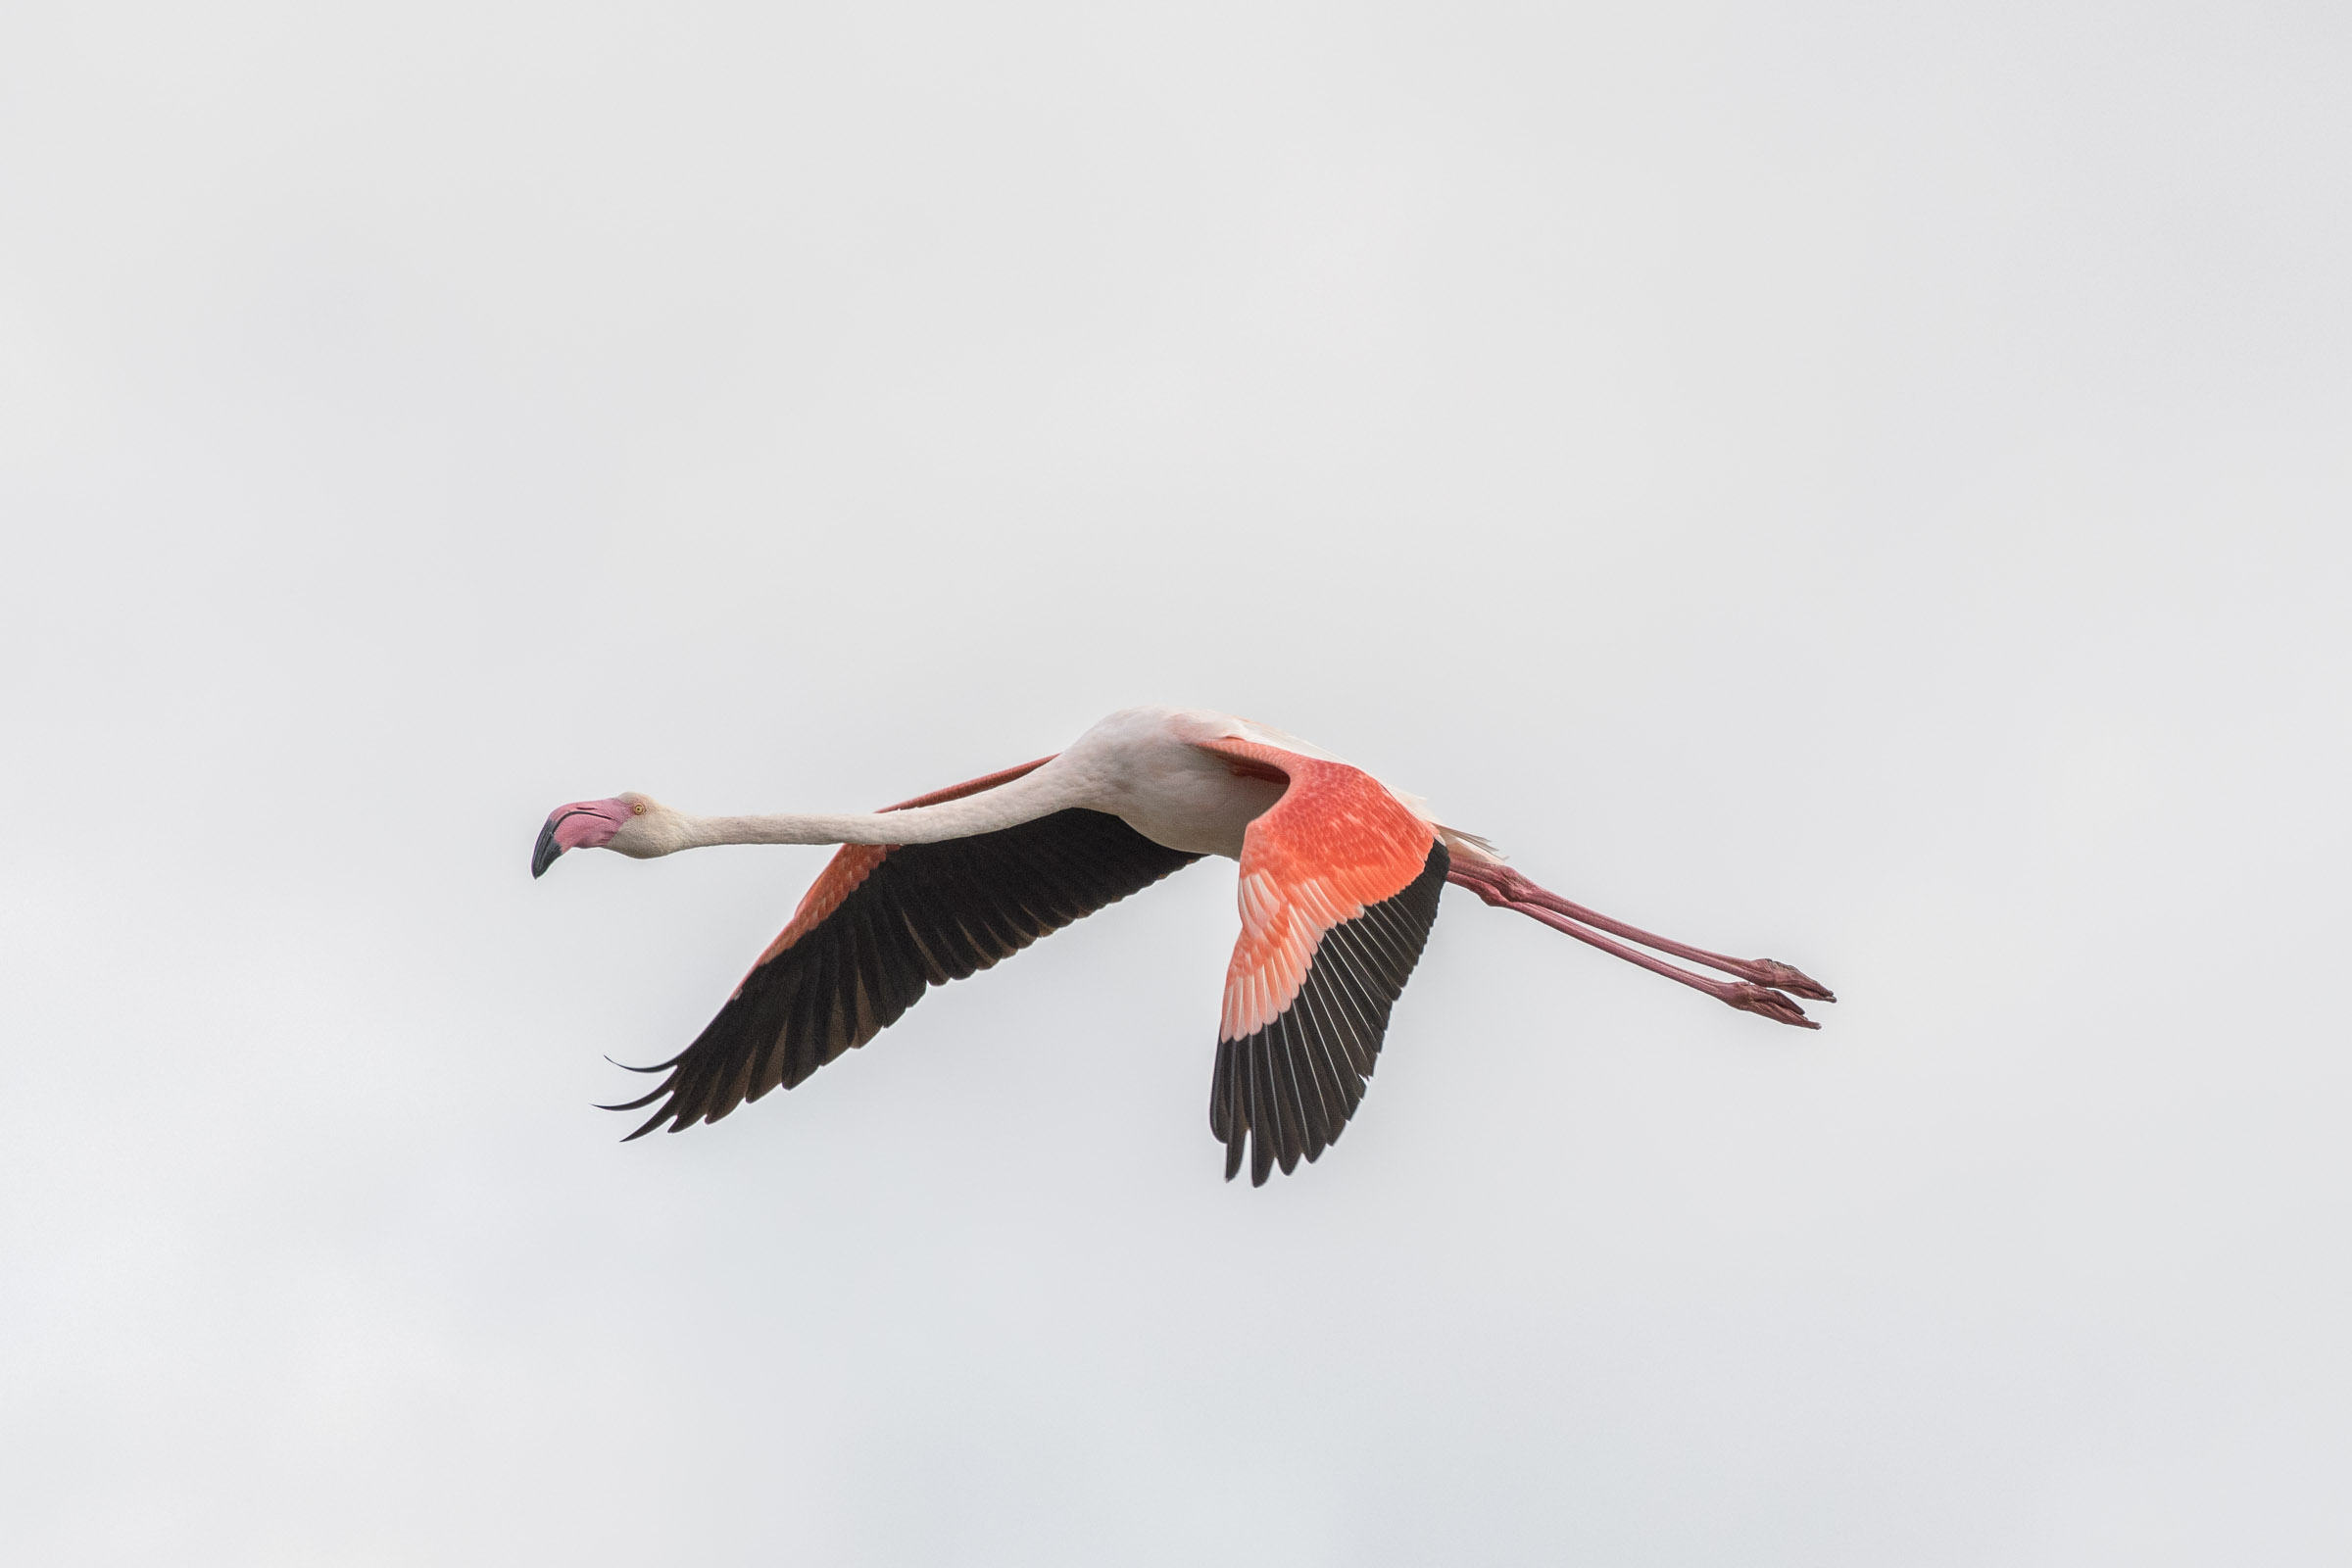 Flamingo - Flamant  - Fenicottero - Phoenicopterus